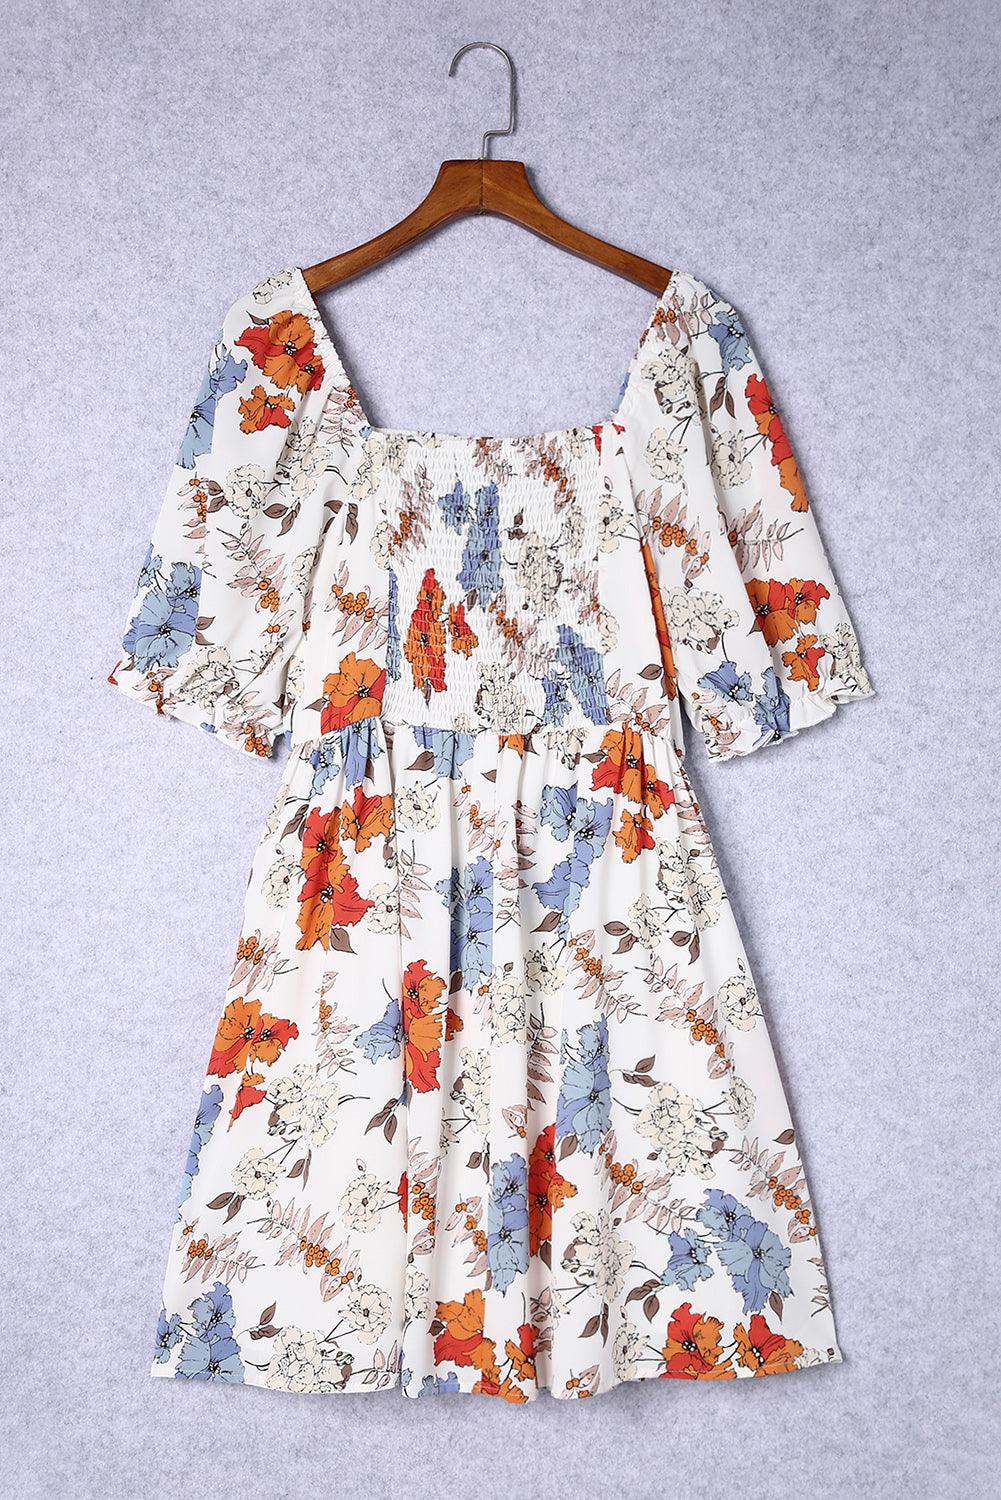 Floral Smocked Flared Plus Size Dress - L & M Kee, LLC